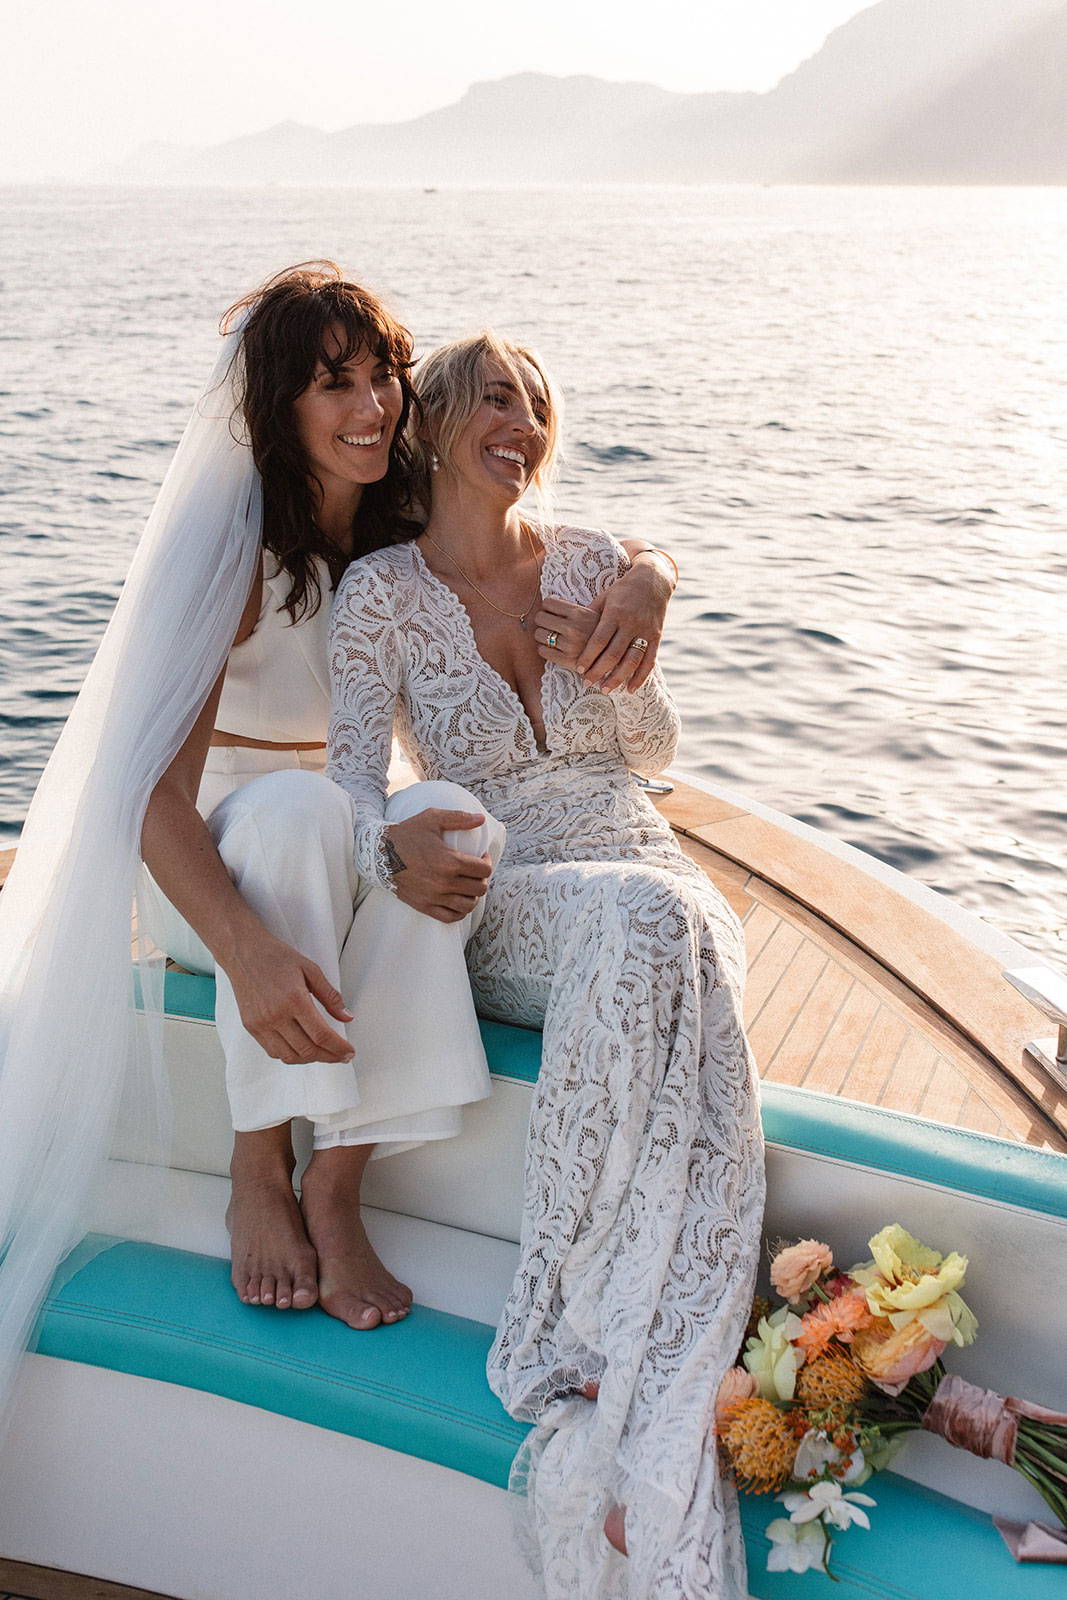 Brides on a boat in Positano, Italy